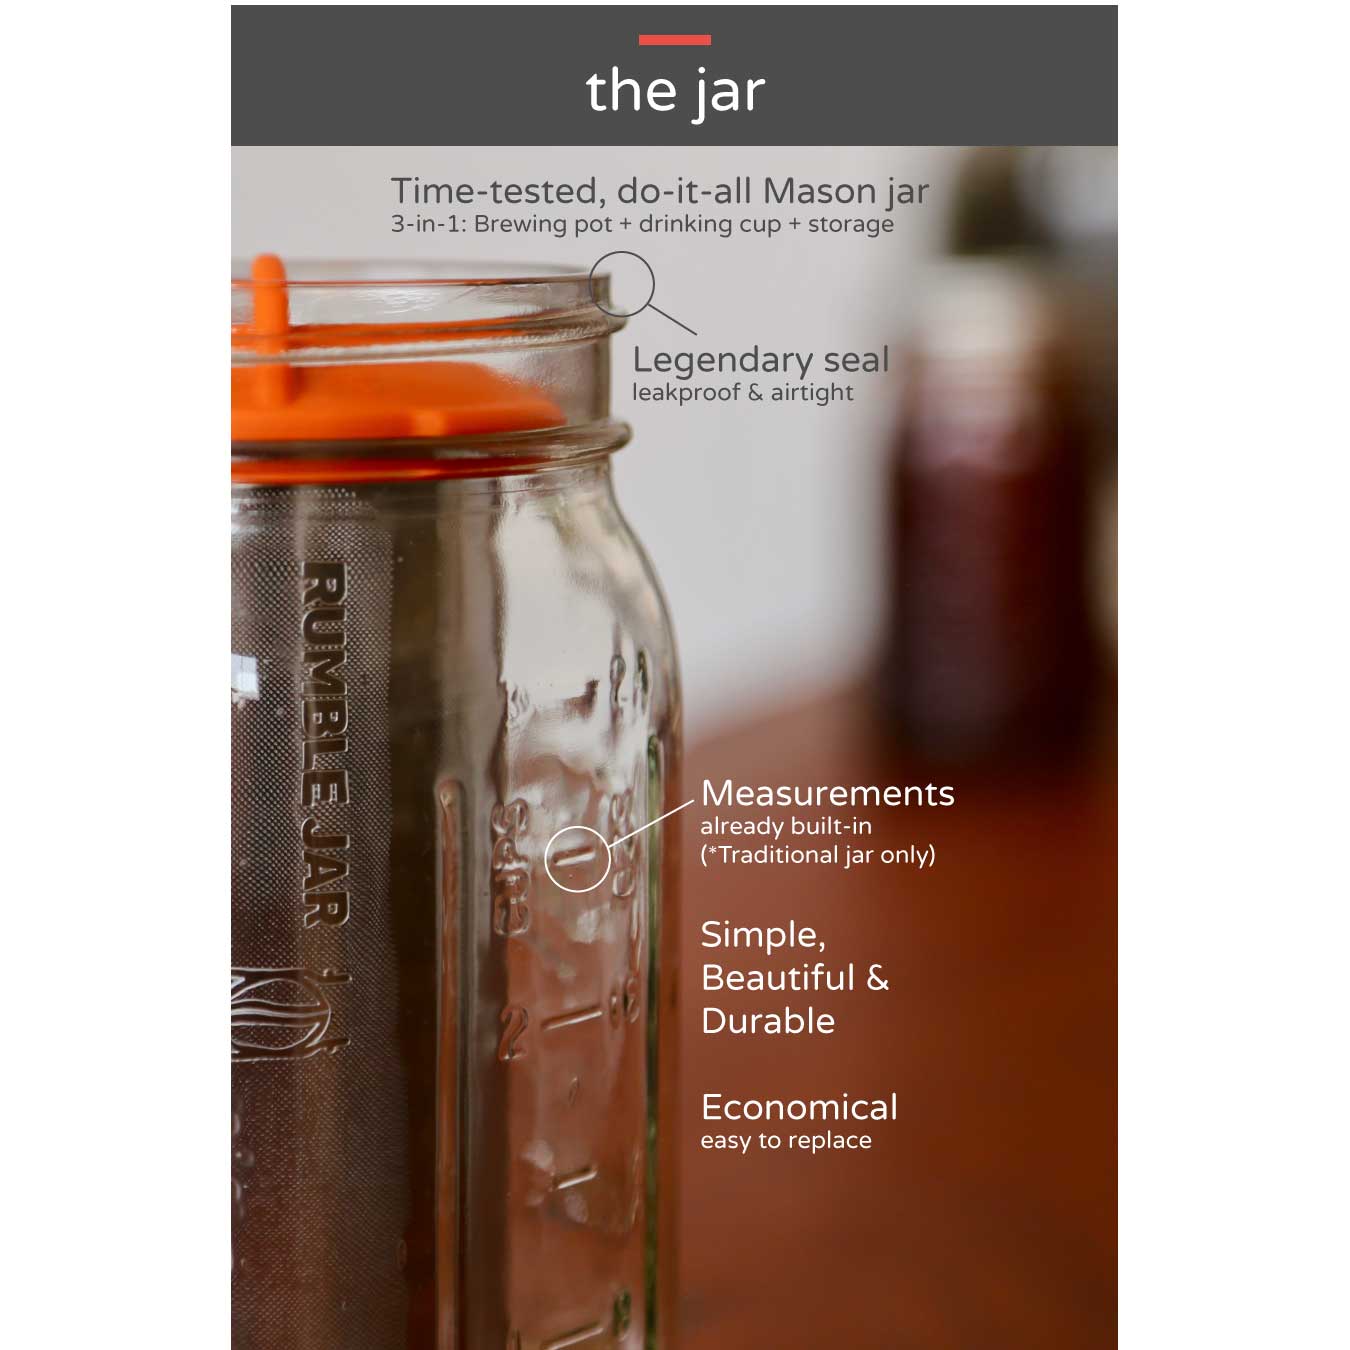 Glass Storage Jar - 1 Gallon Capacity | Masthome